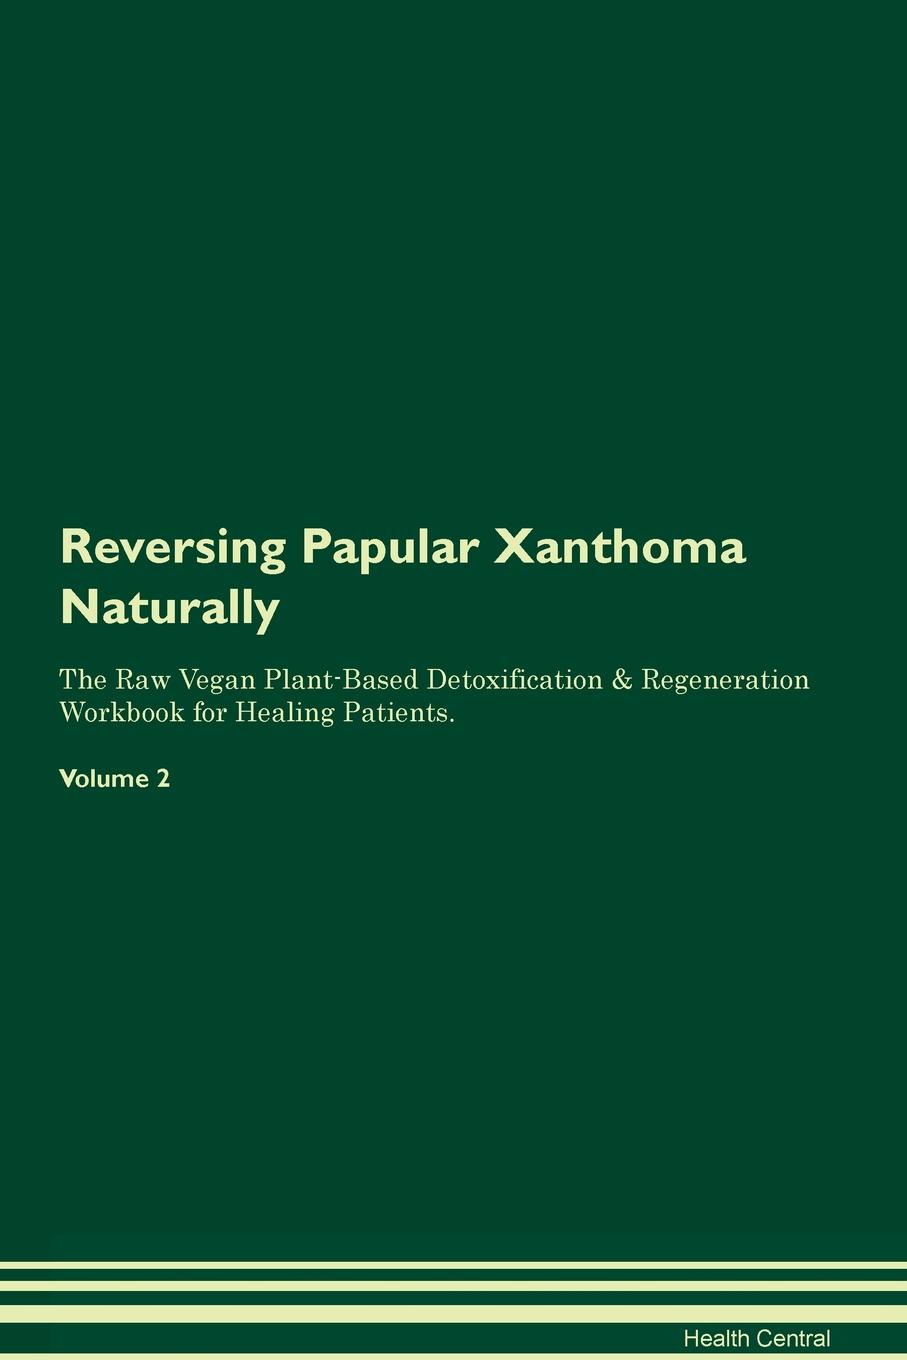 Reversing Papular Xanthoma Naturally The Raw Vegan Plant-Based Detoxification & Regeneration Workbook for Healing Patients. Volume 2